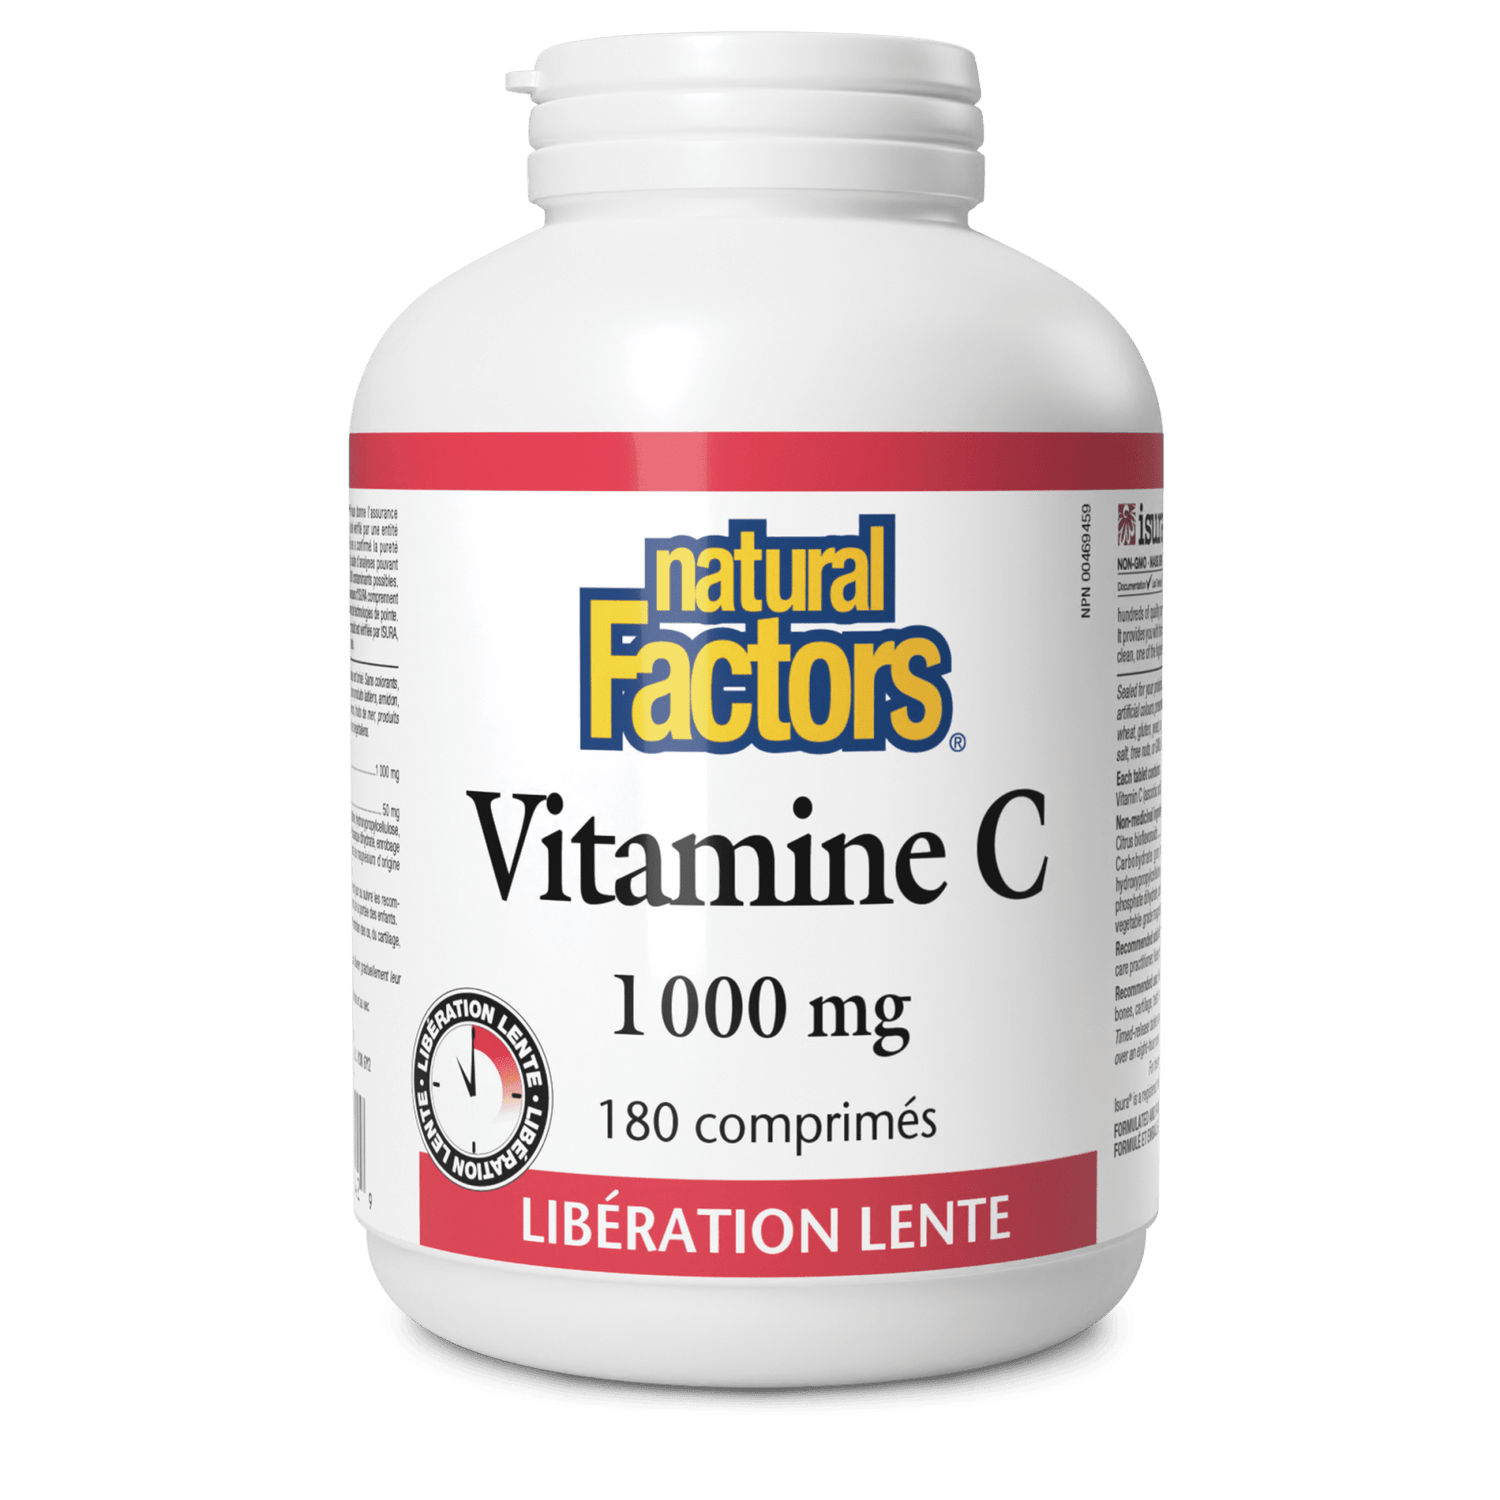 Vitamine C Libération lente 1 000 mg, Natural Factors|v|image|1342